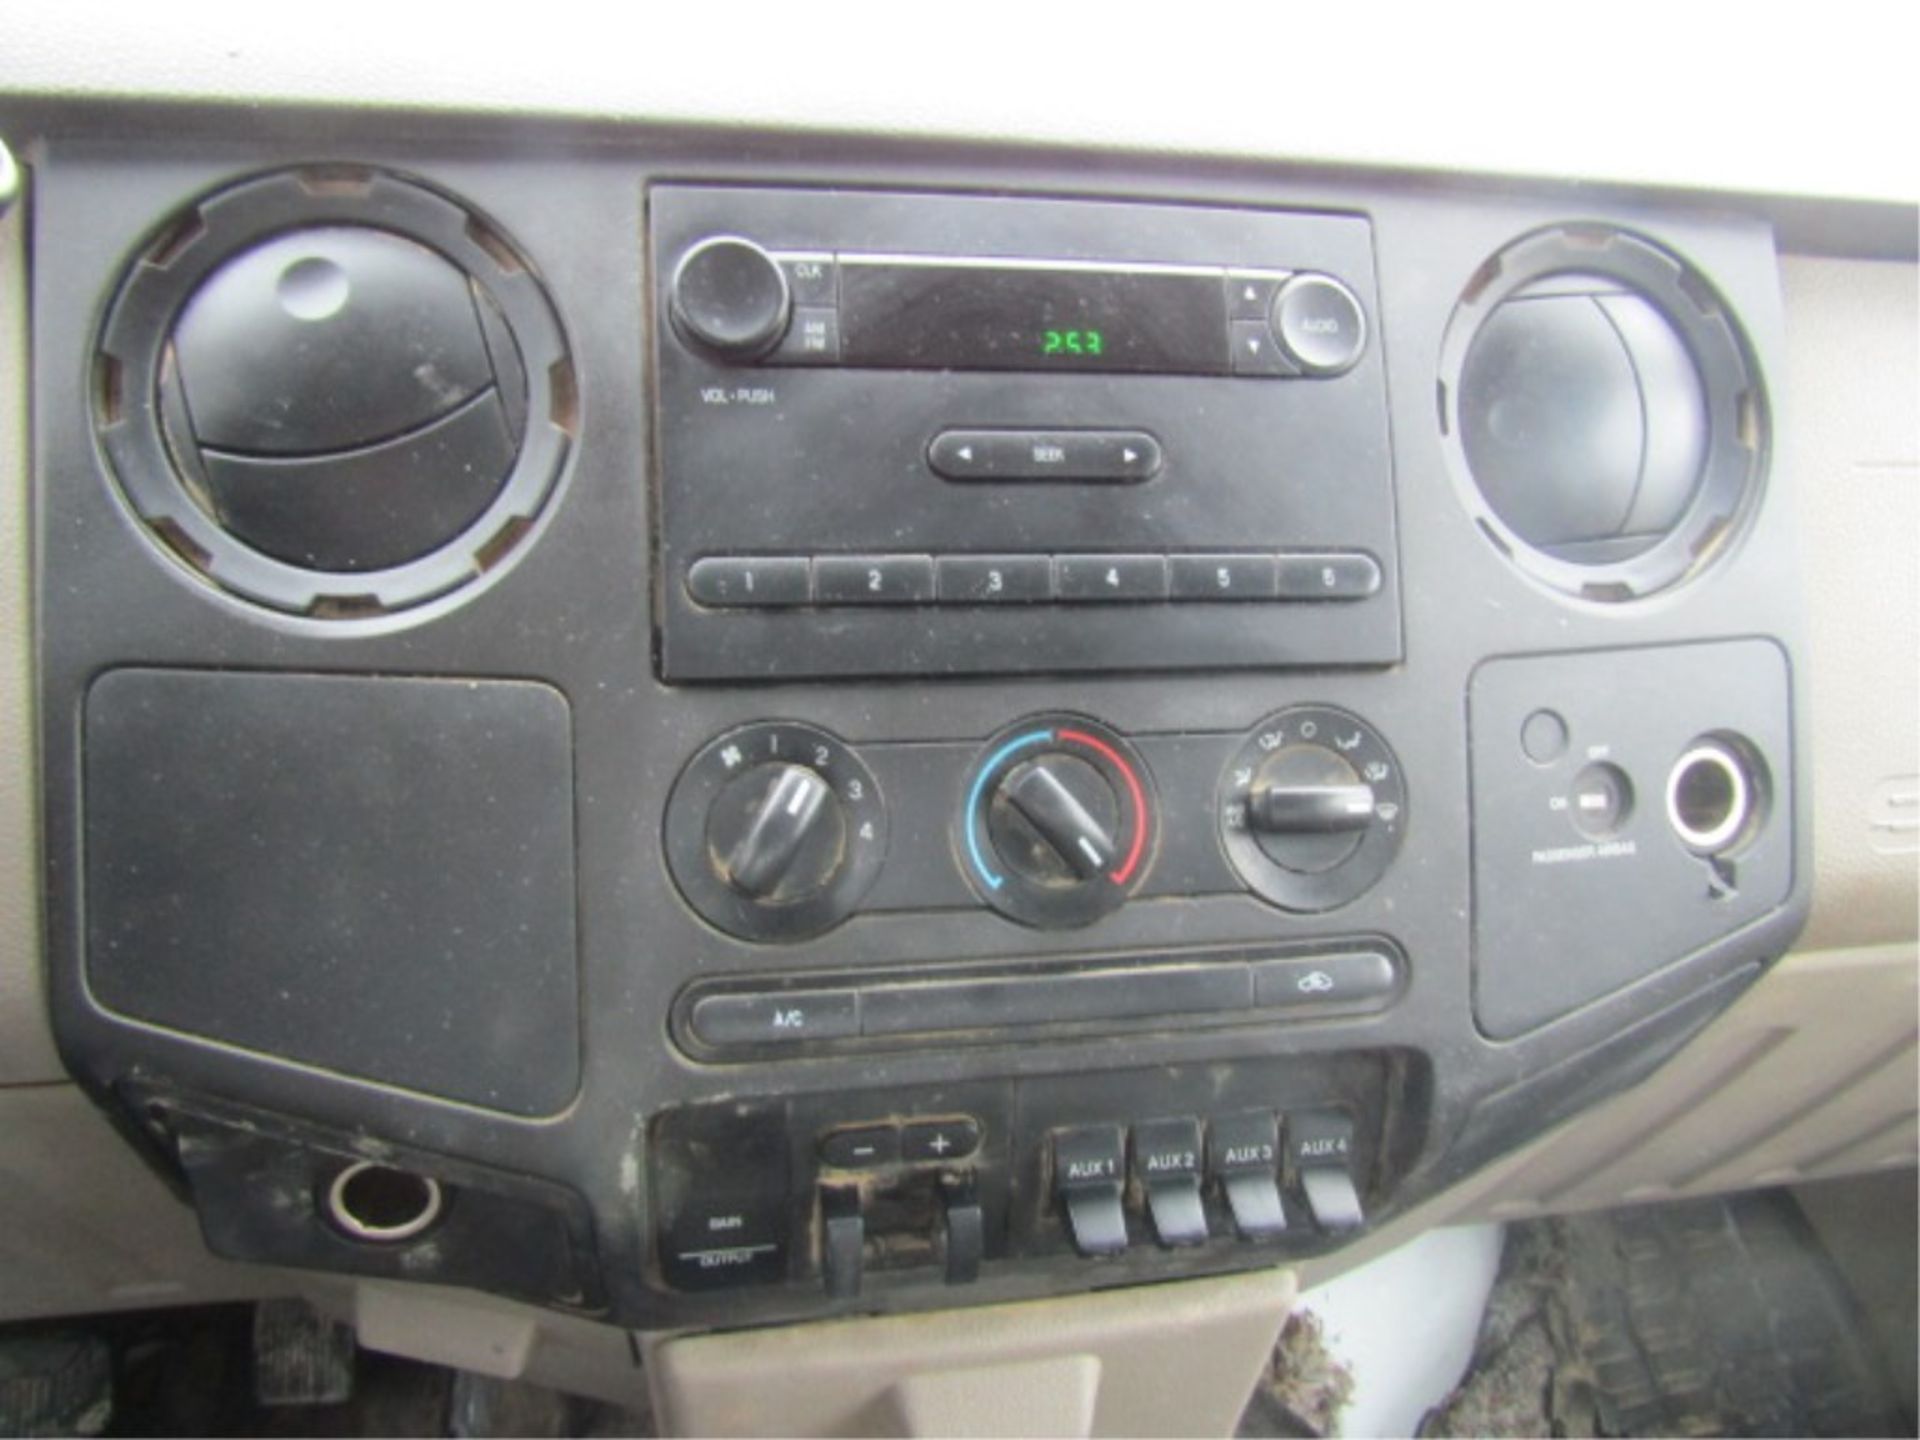 2008 Ford F450 Wall Super Duty Truck, Vin # 1FDXX46R68EC77947, Automatic Transmission, V8 Power - Image 20 of 24